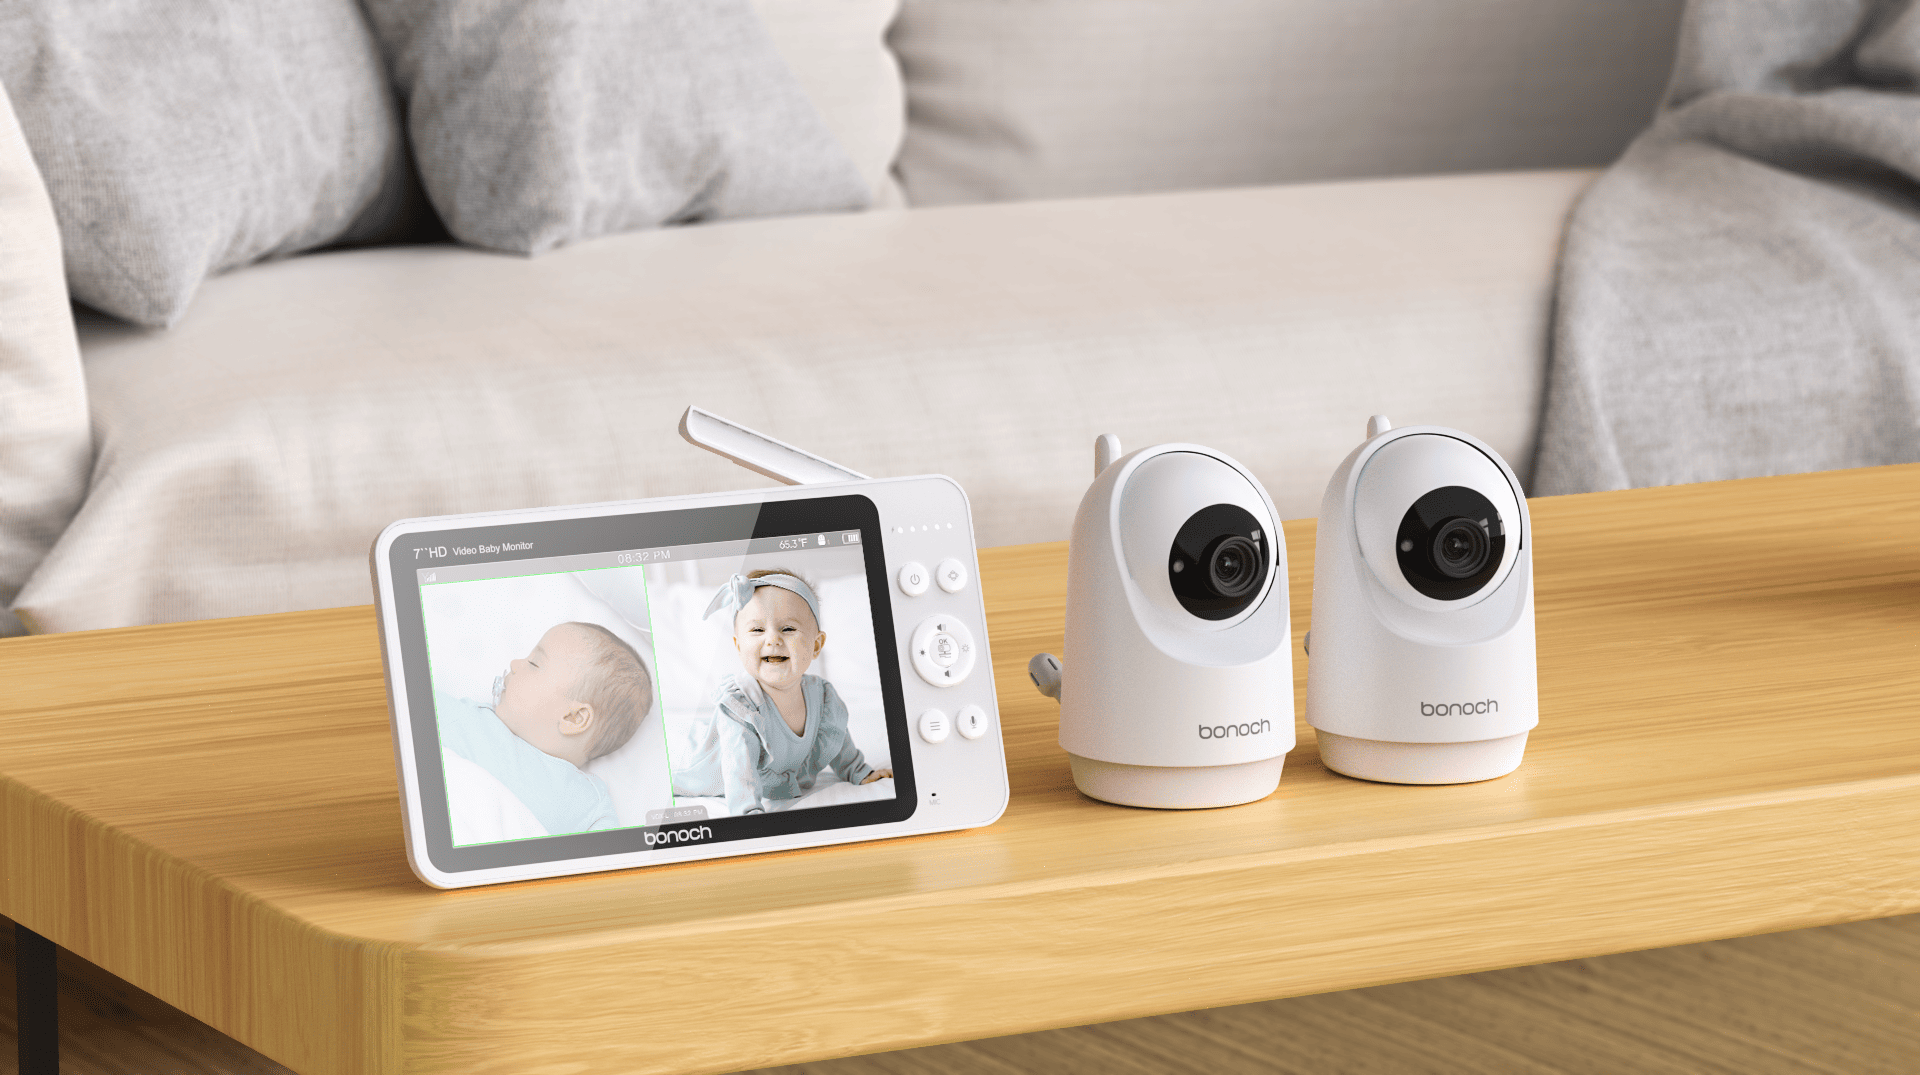 VTech Smart Wi-Fi 1080p Pan & Tilt Monitor review - Today's Parent